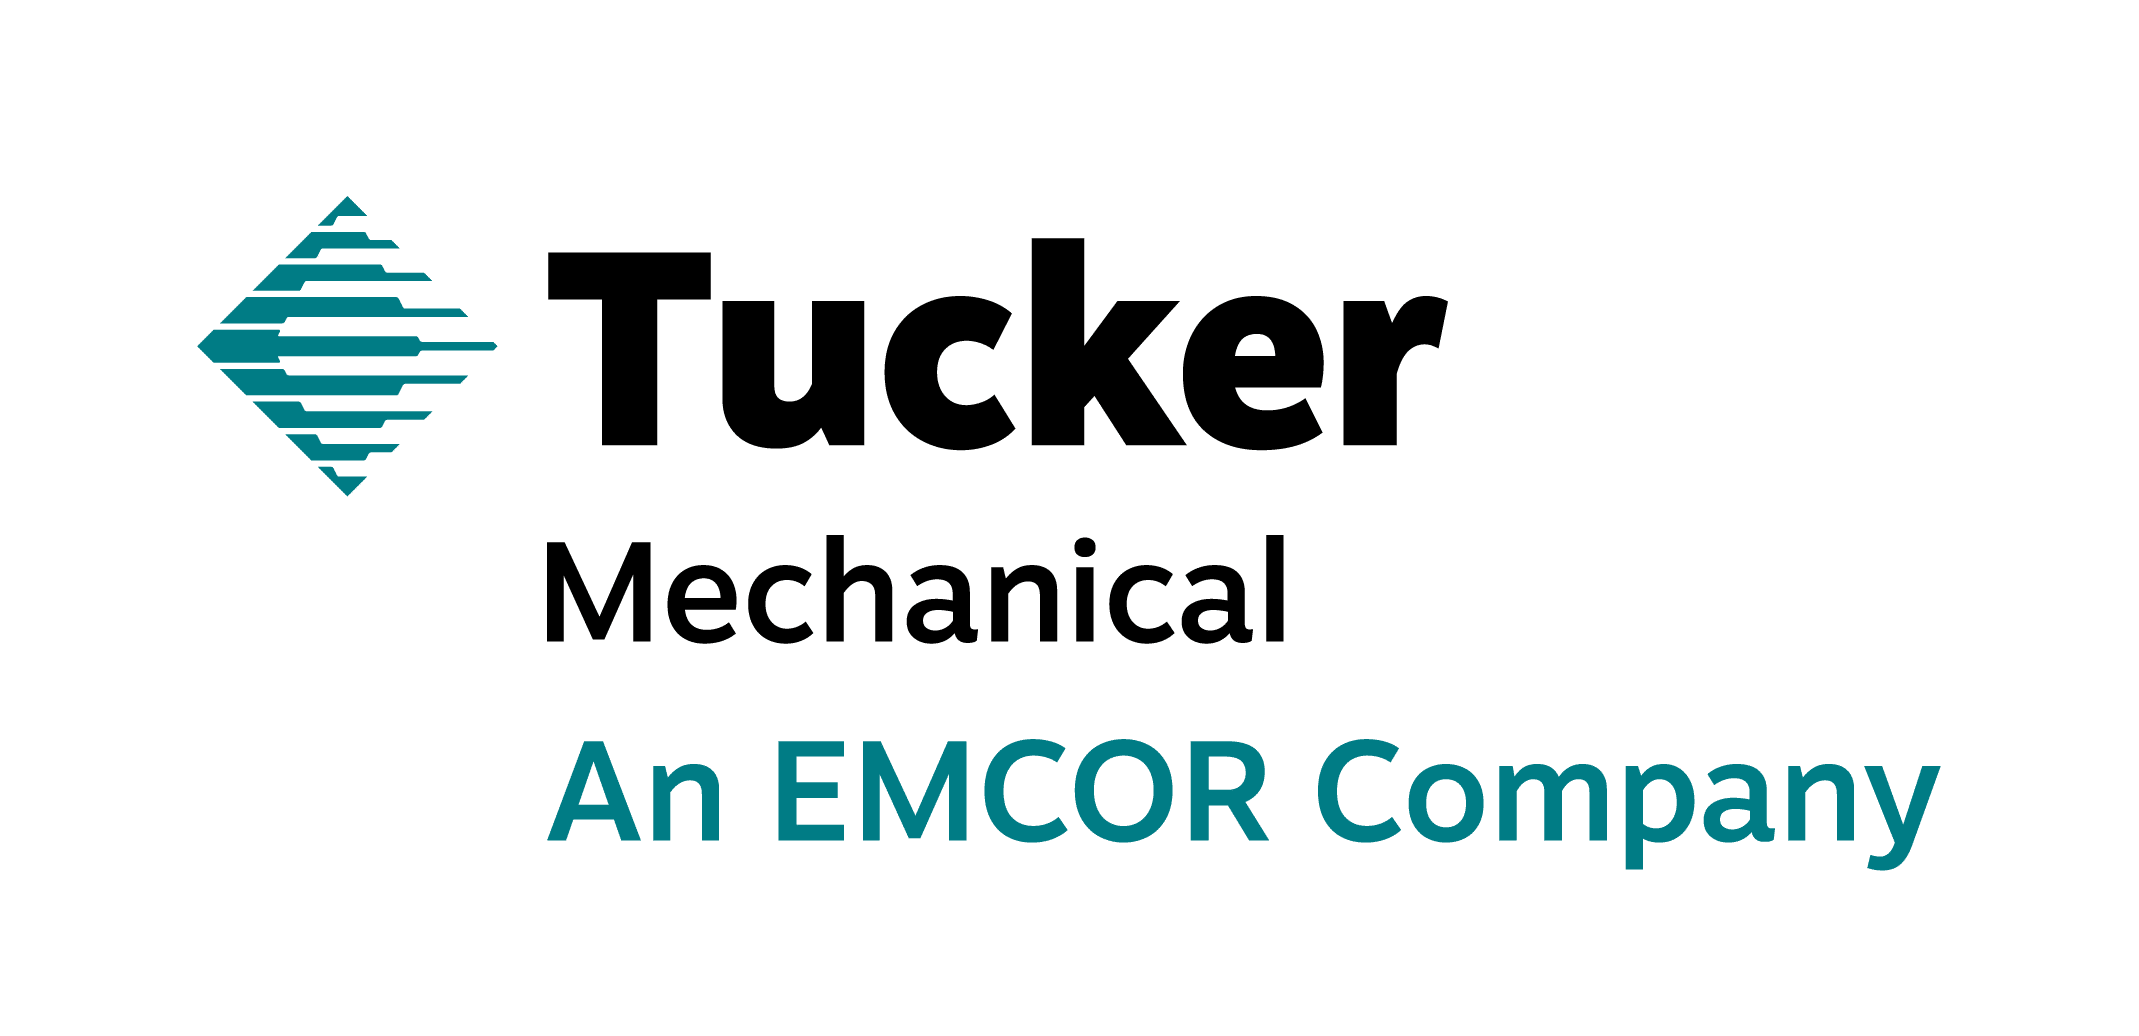 Tucker Mechanical